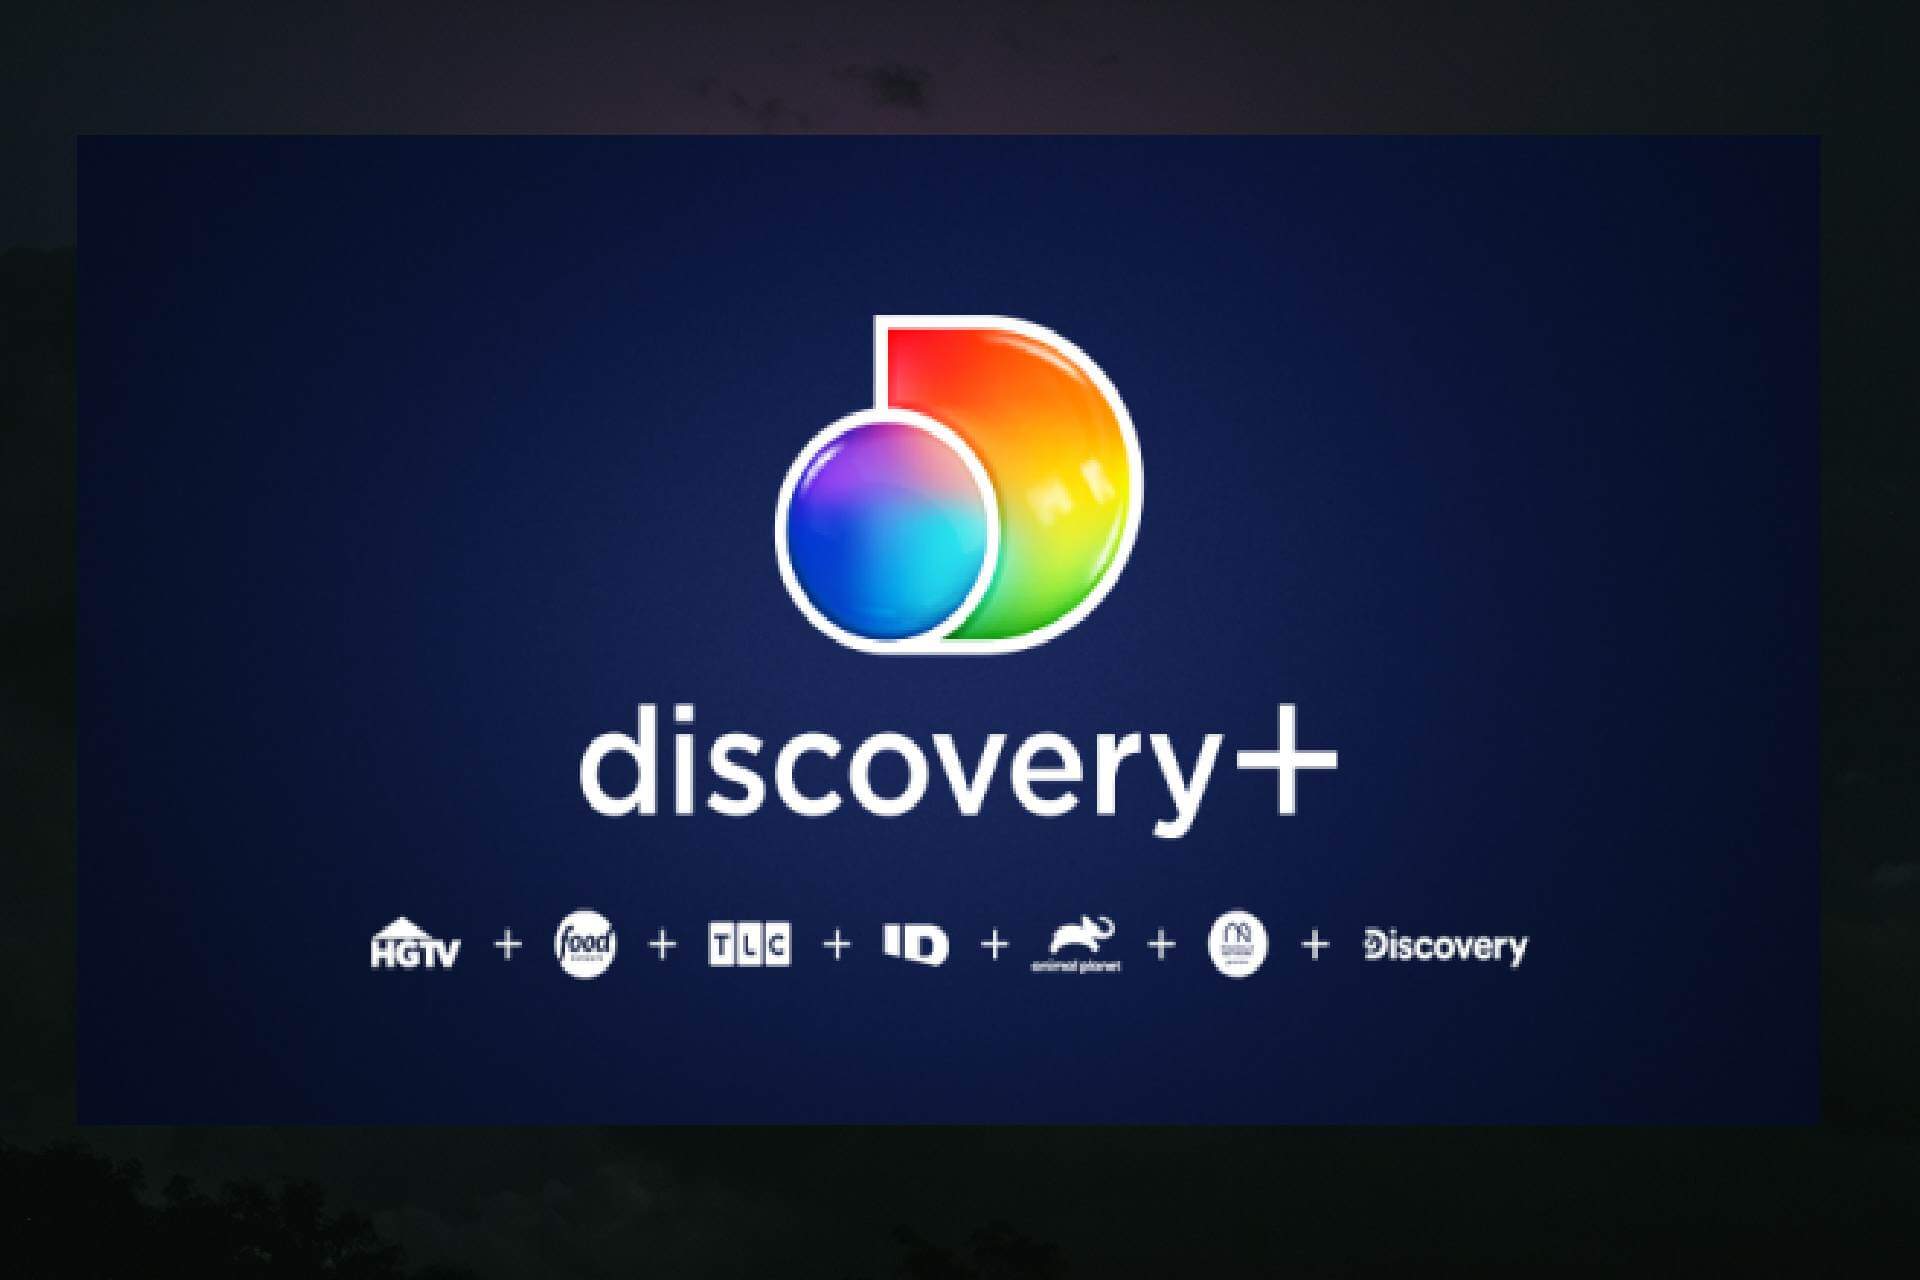 discovery plus price comcast